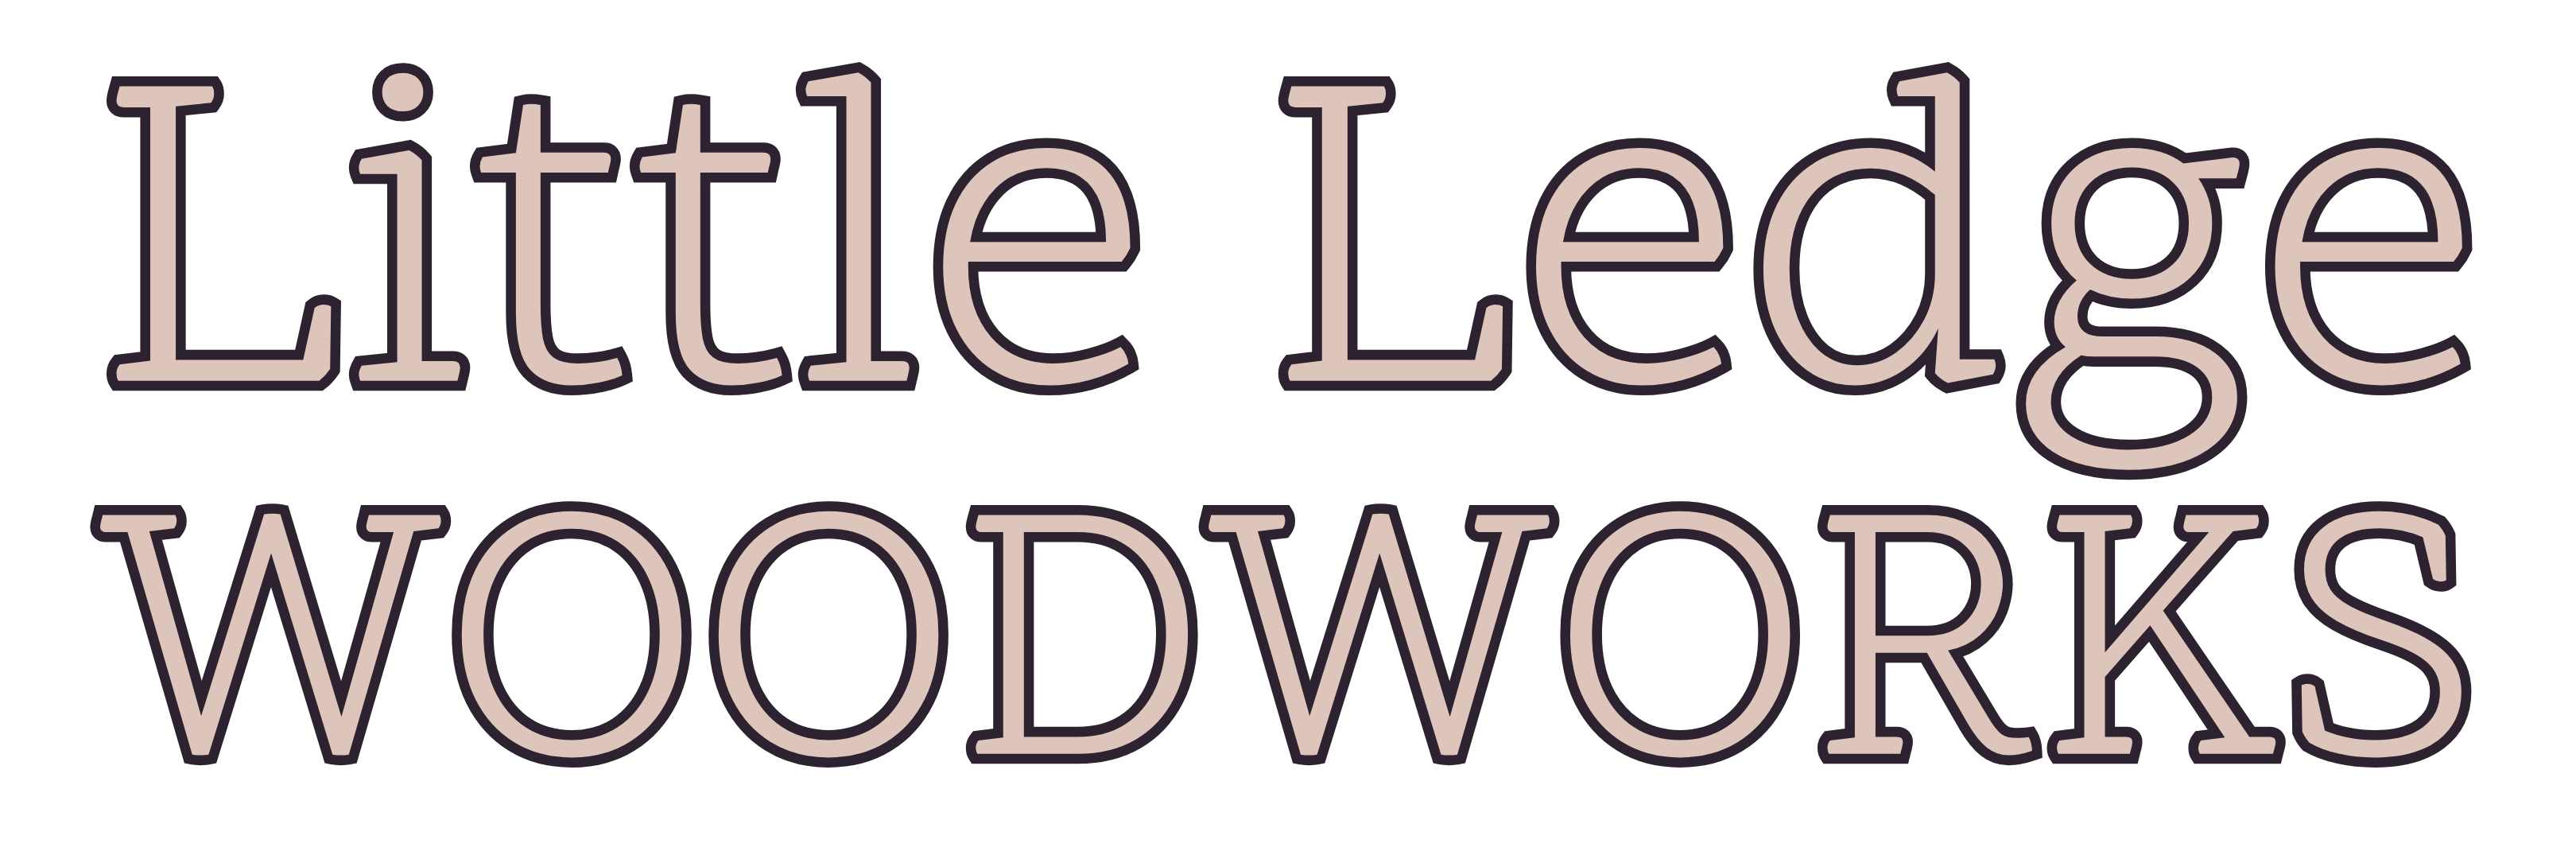 Little Ledge Woodworks